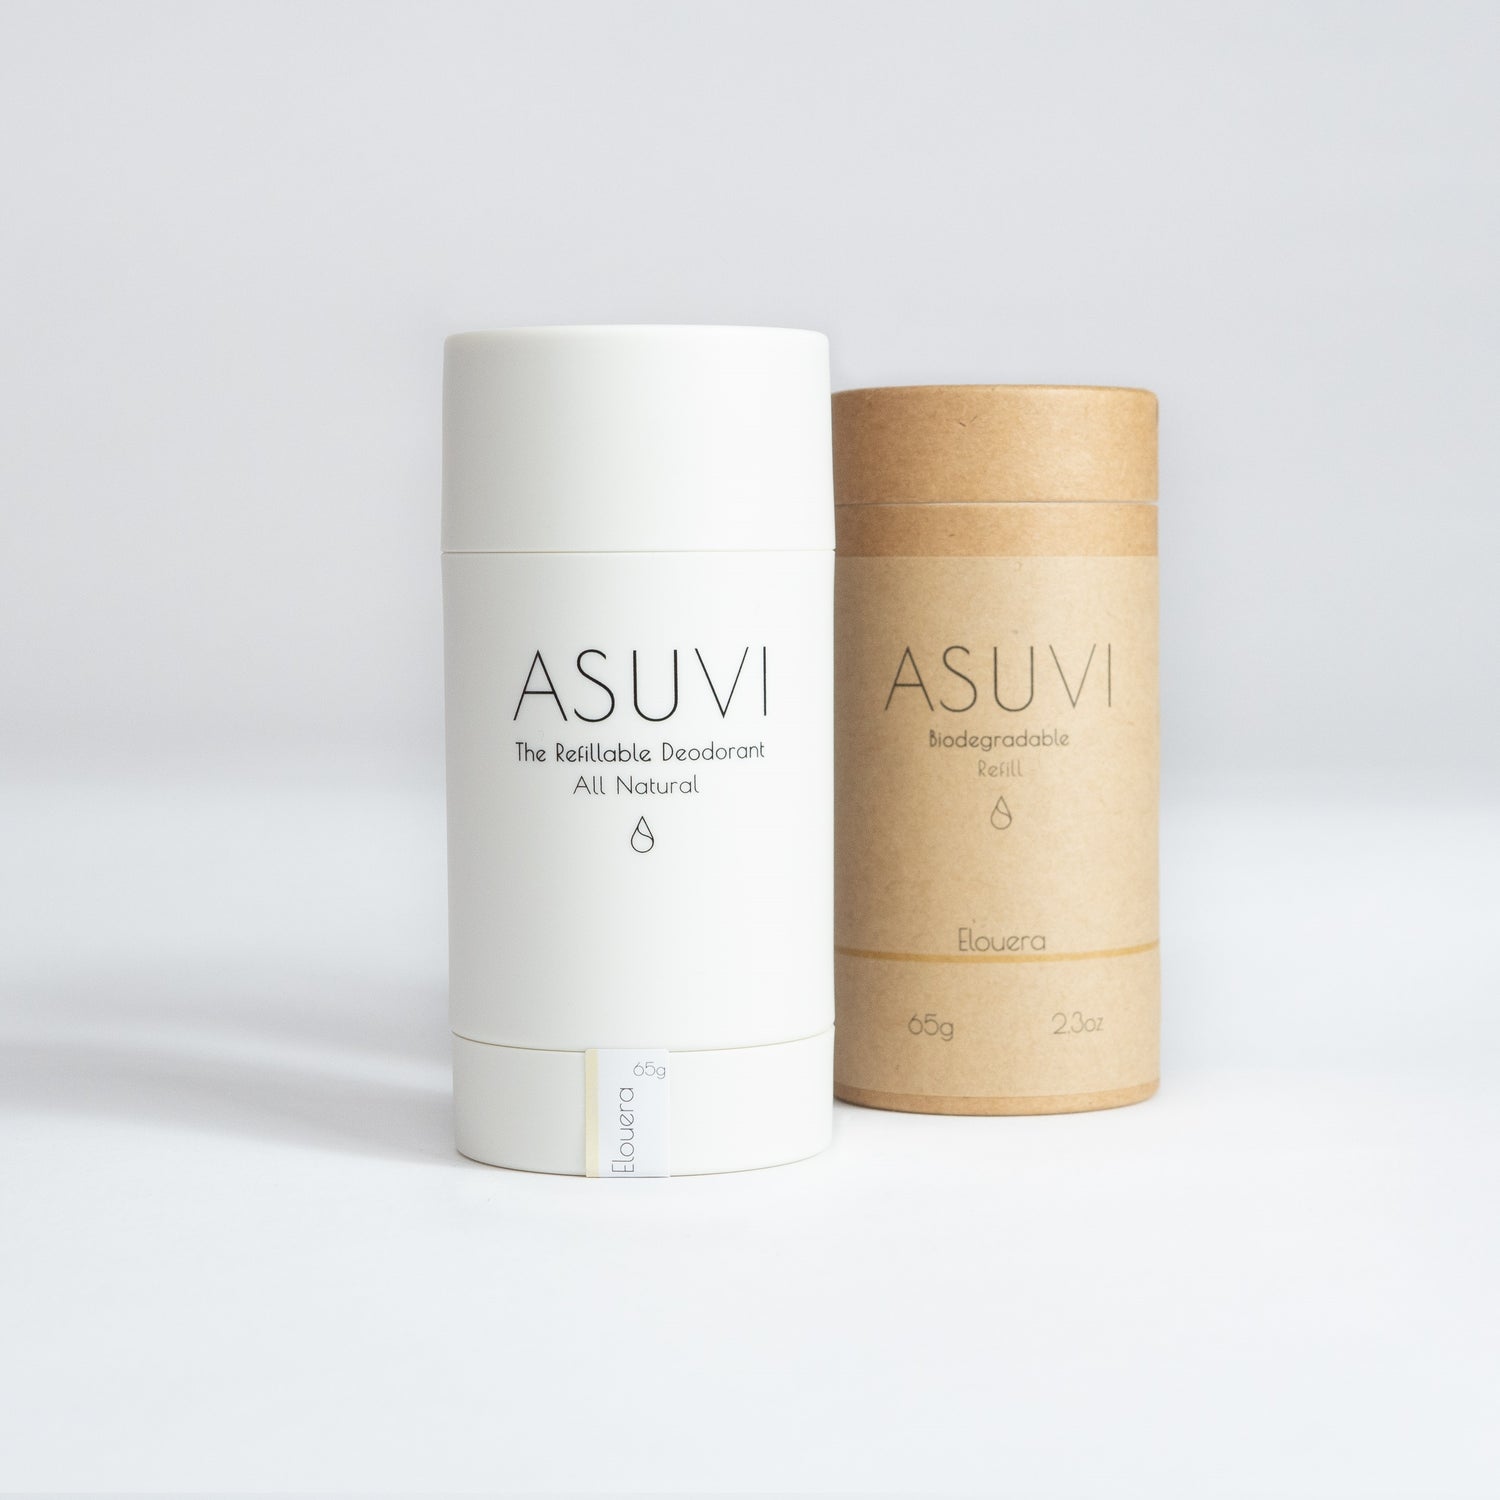 Asuvi Deodorant - Normal/Elouera 減汗香體膏 - 一般配方/清新柑橘調 65g